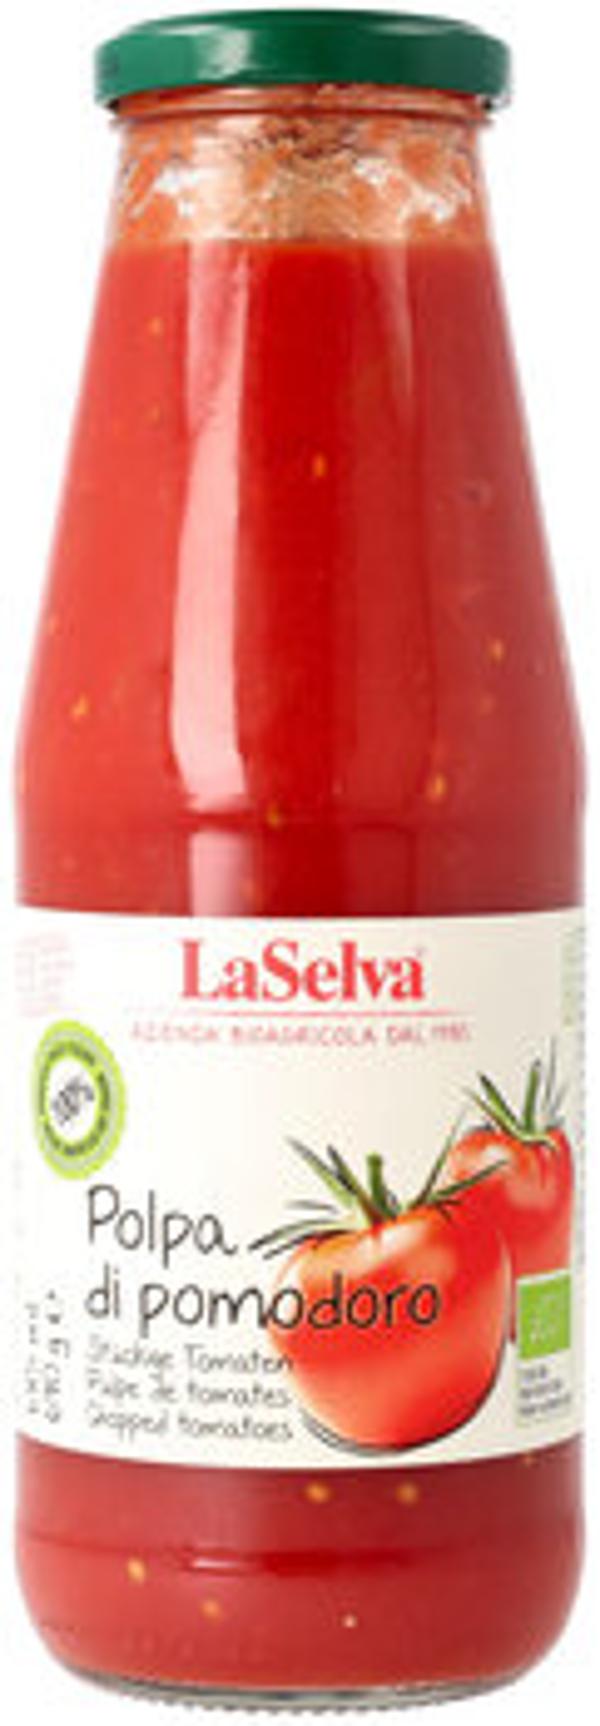 Produktfoto zu Polpa di pomodoro - Stückige Tomaten 690g